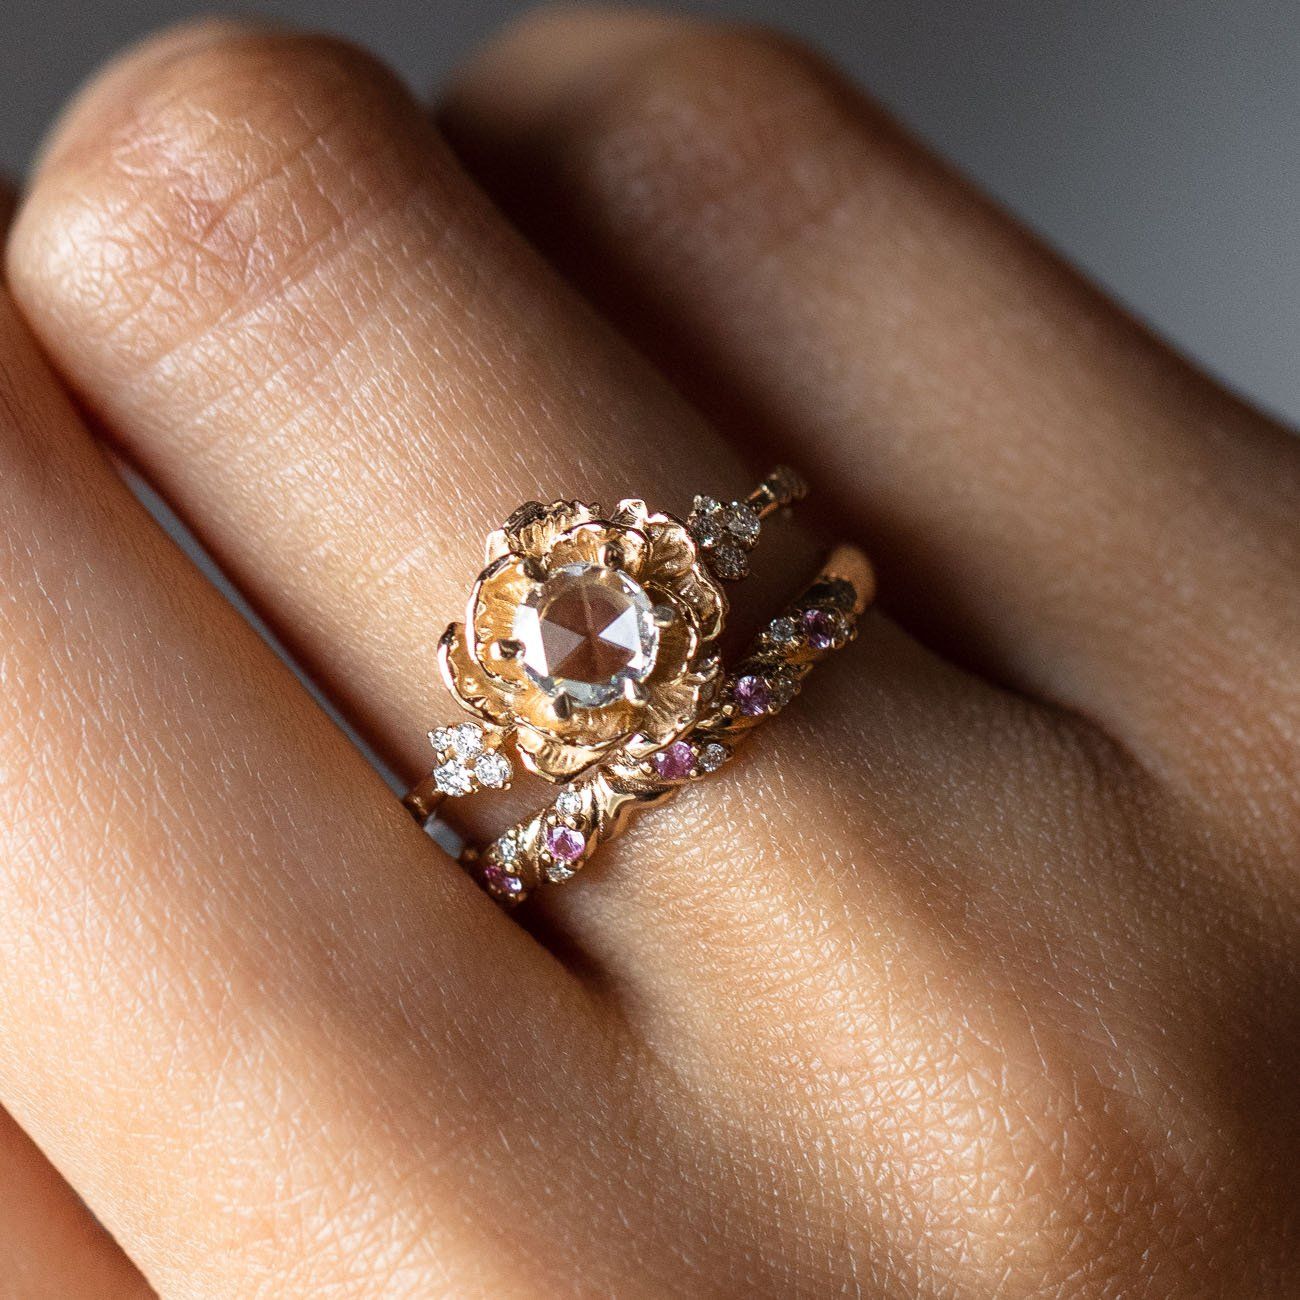 rosecut diamond paeonia ring yellow gold fine modern statement solid jewelry